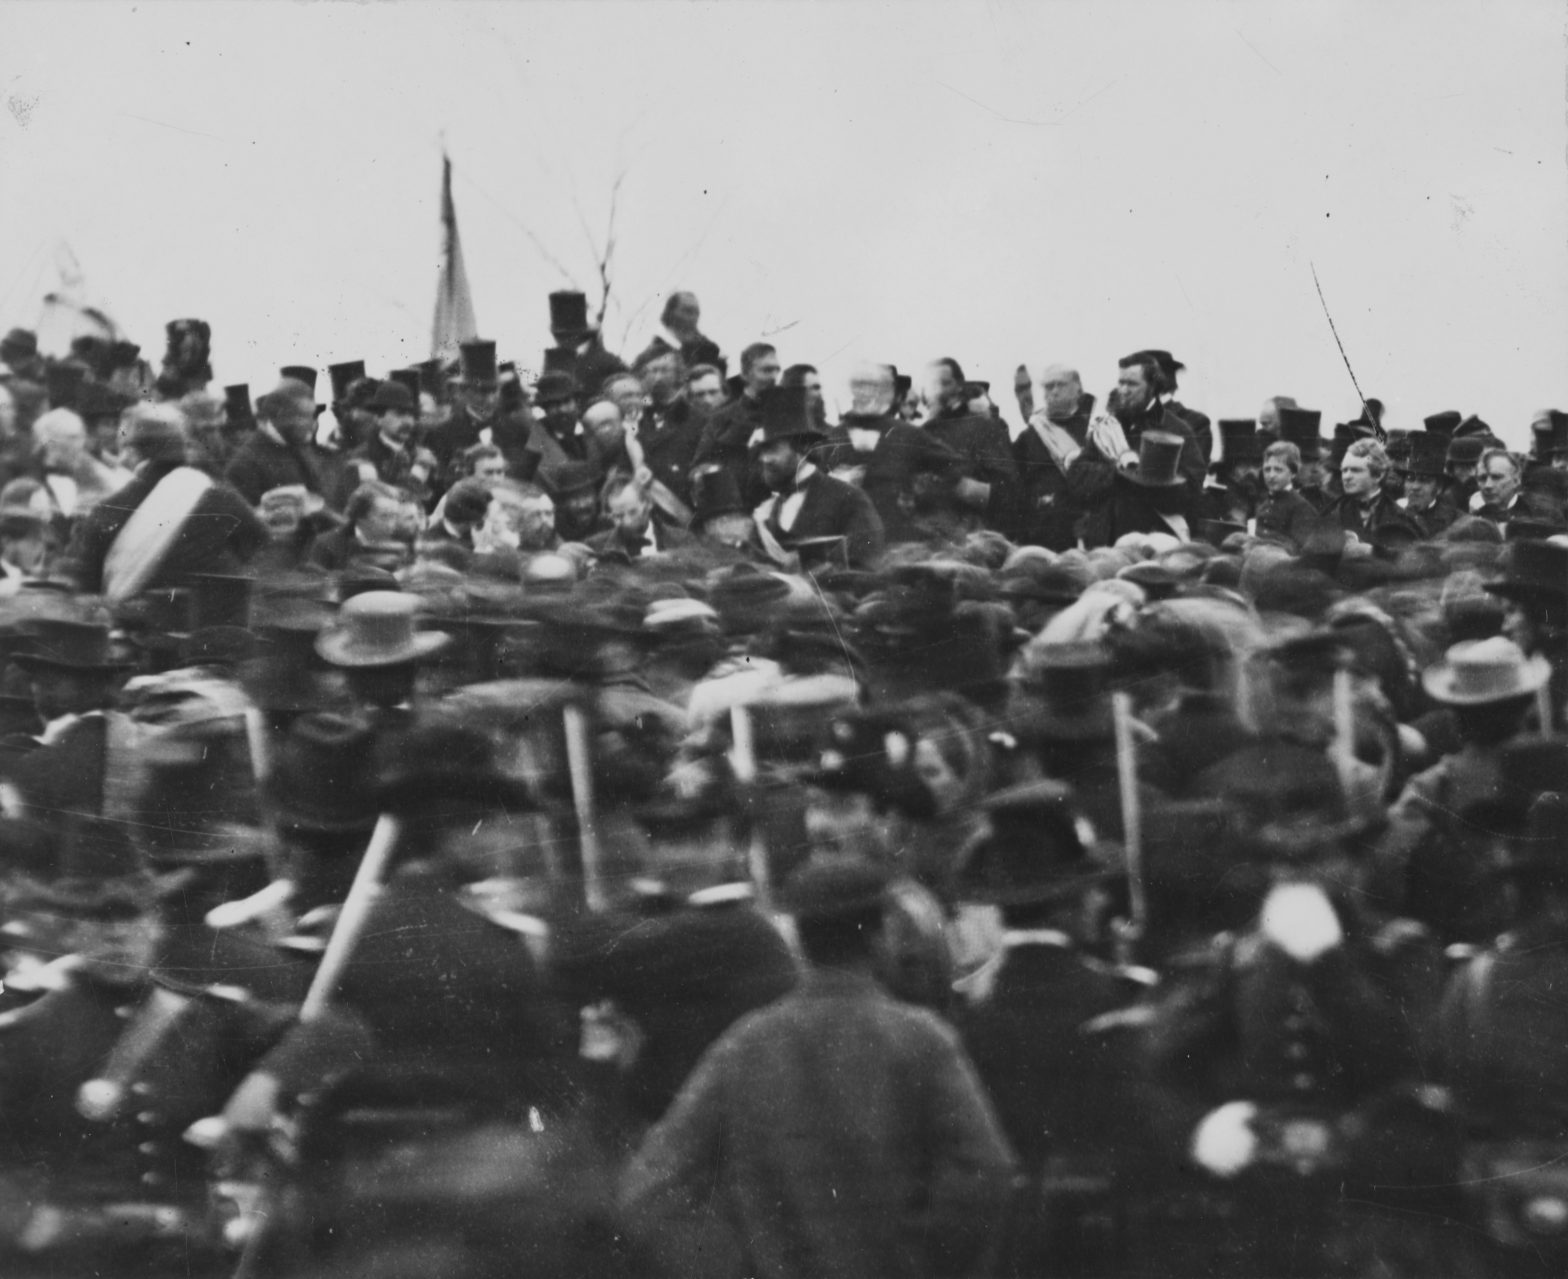 Lincoln speaking at Gettysburg